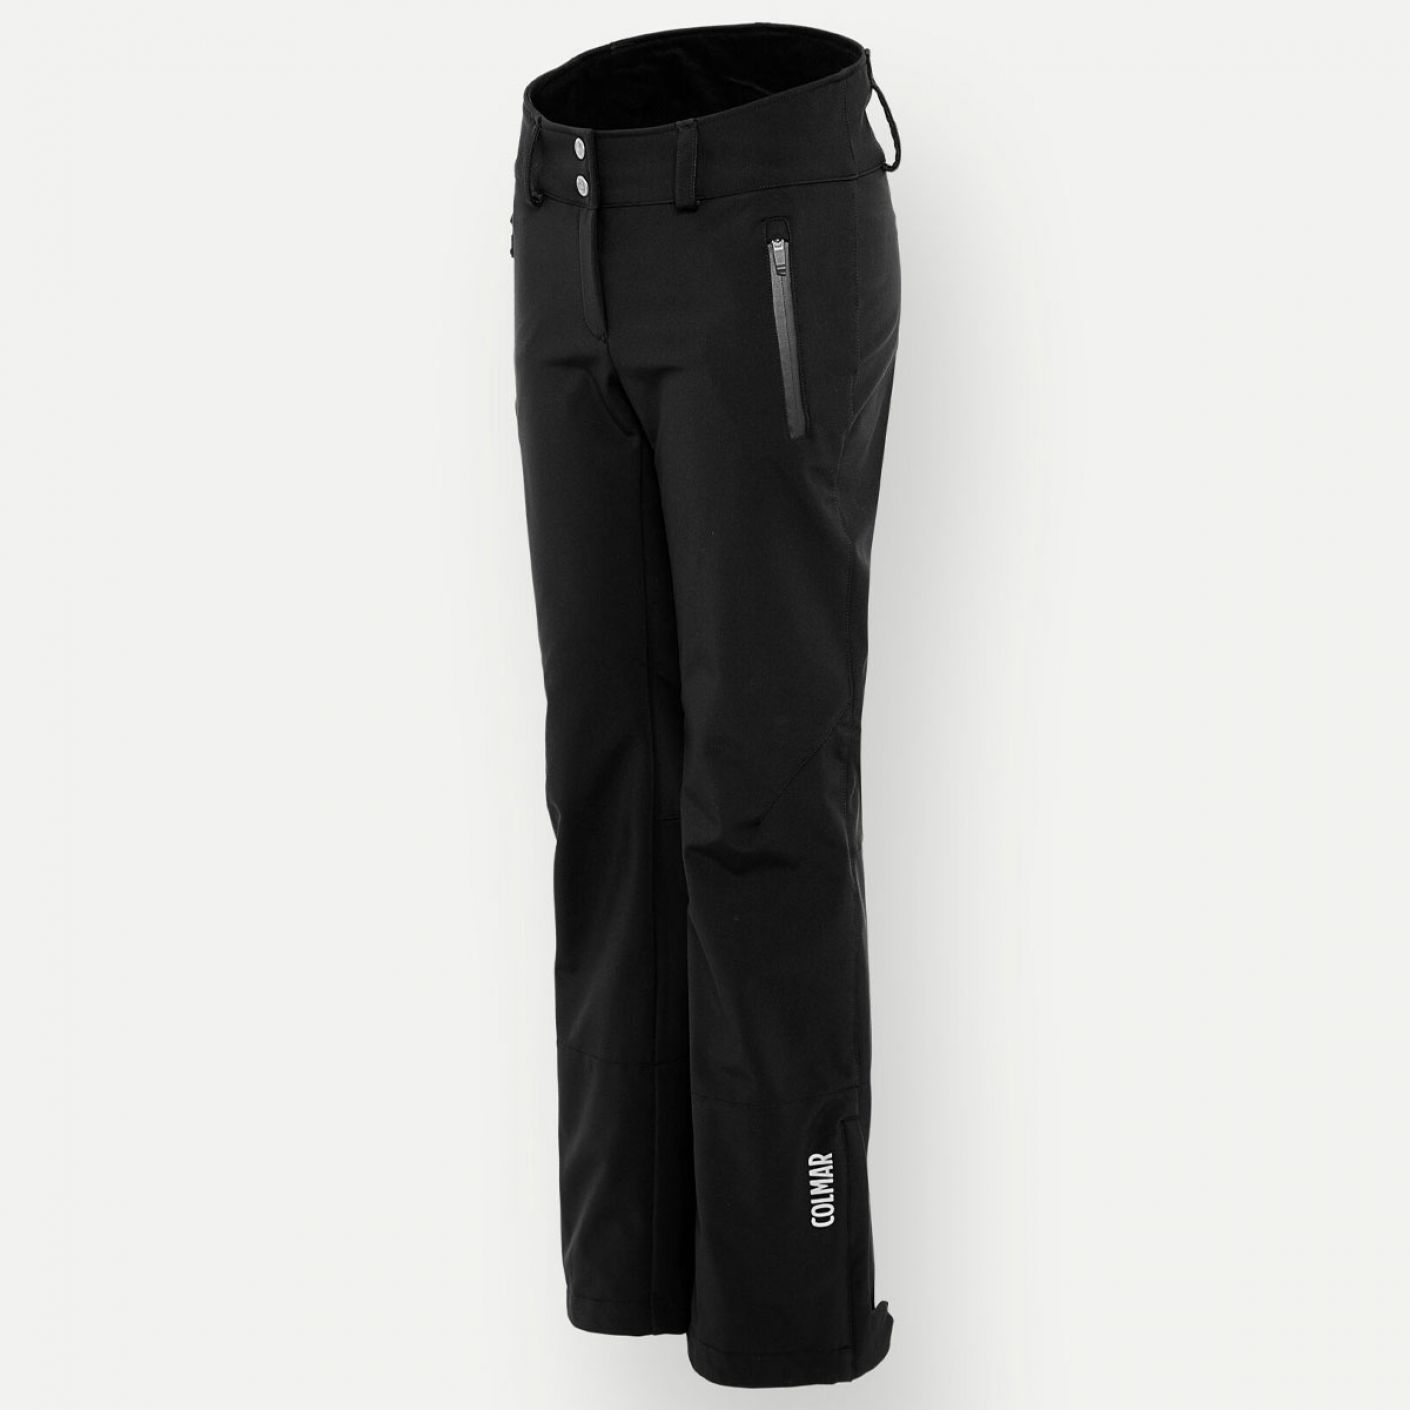 Colmar Women's Softshell Ski Pants with Gaiter Black